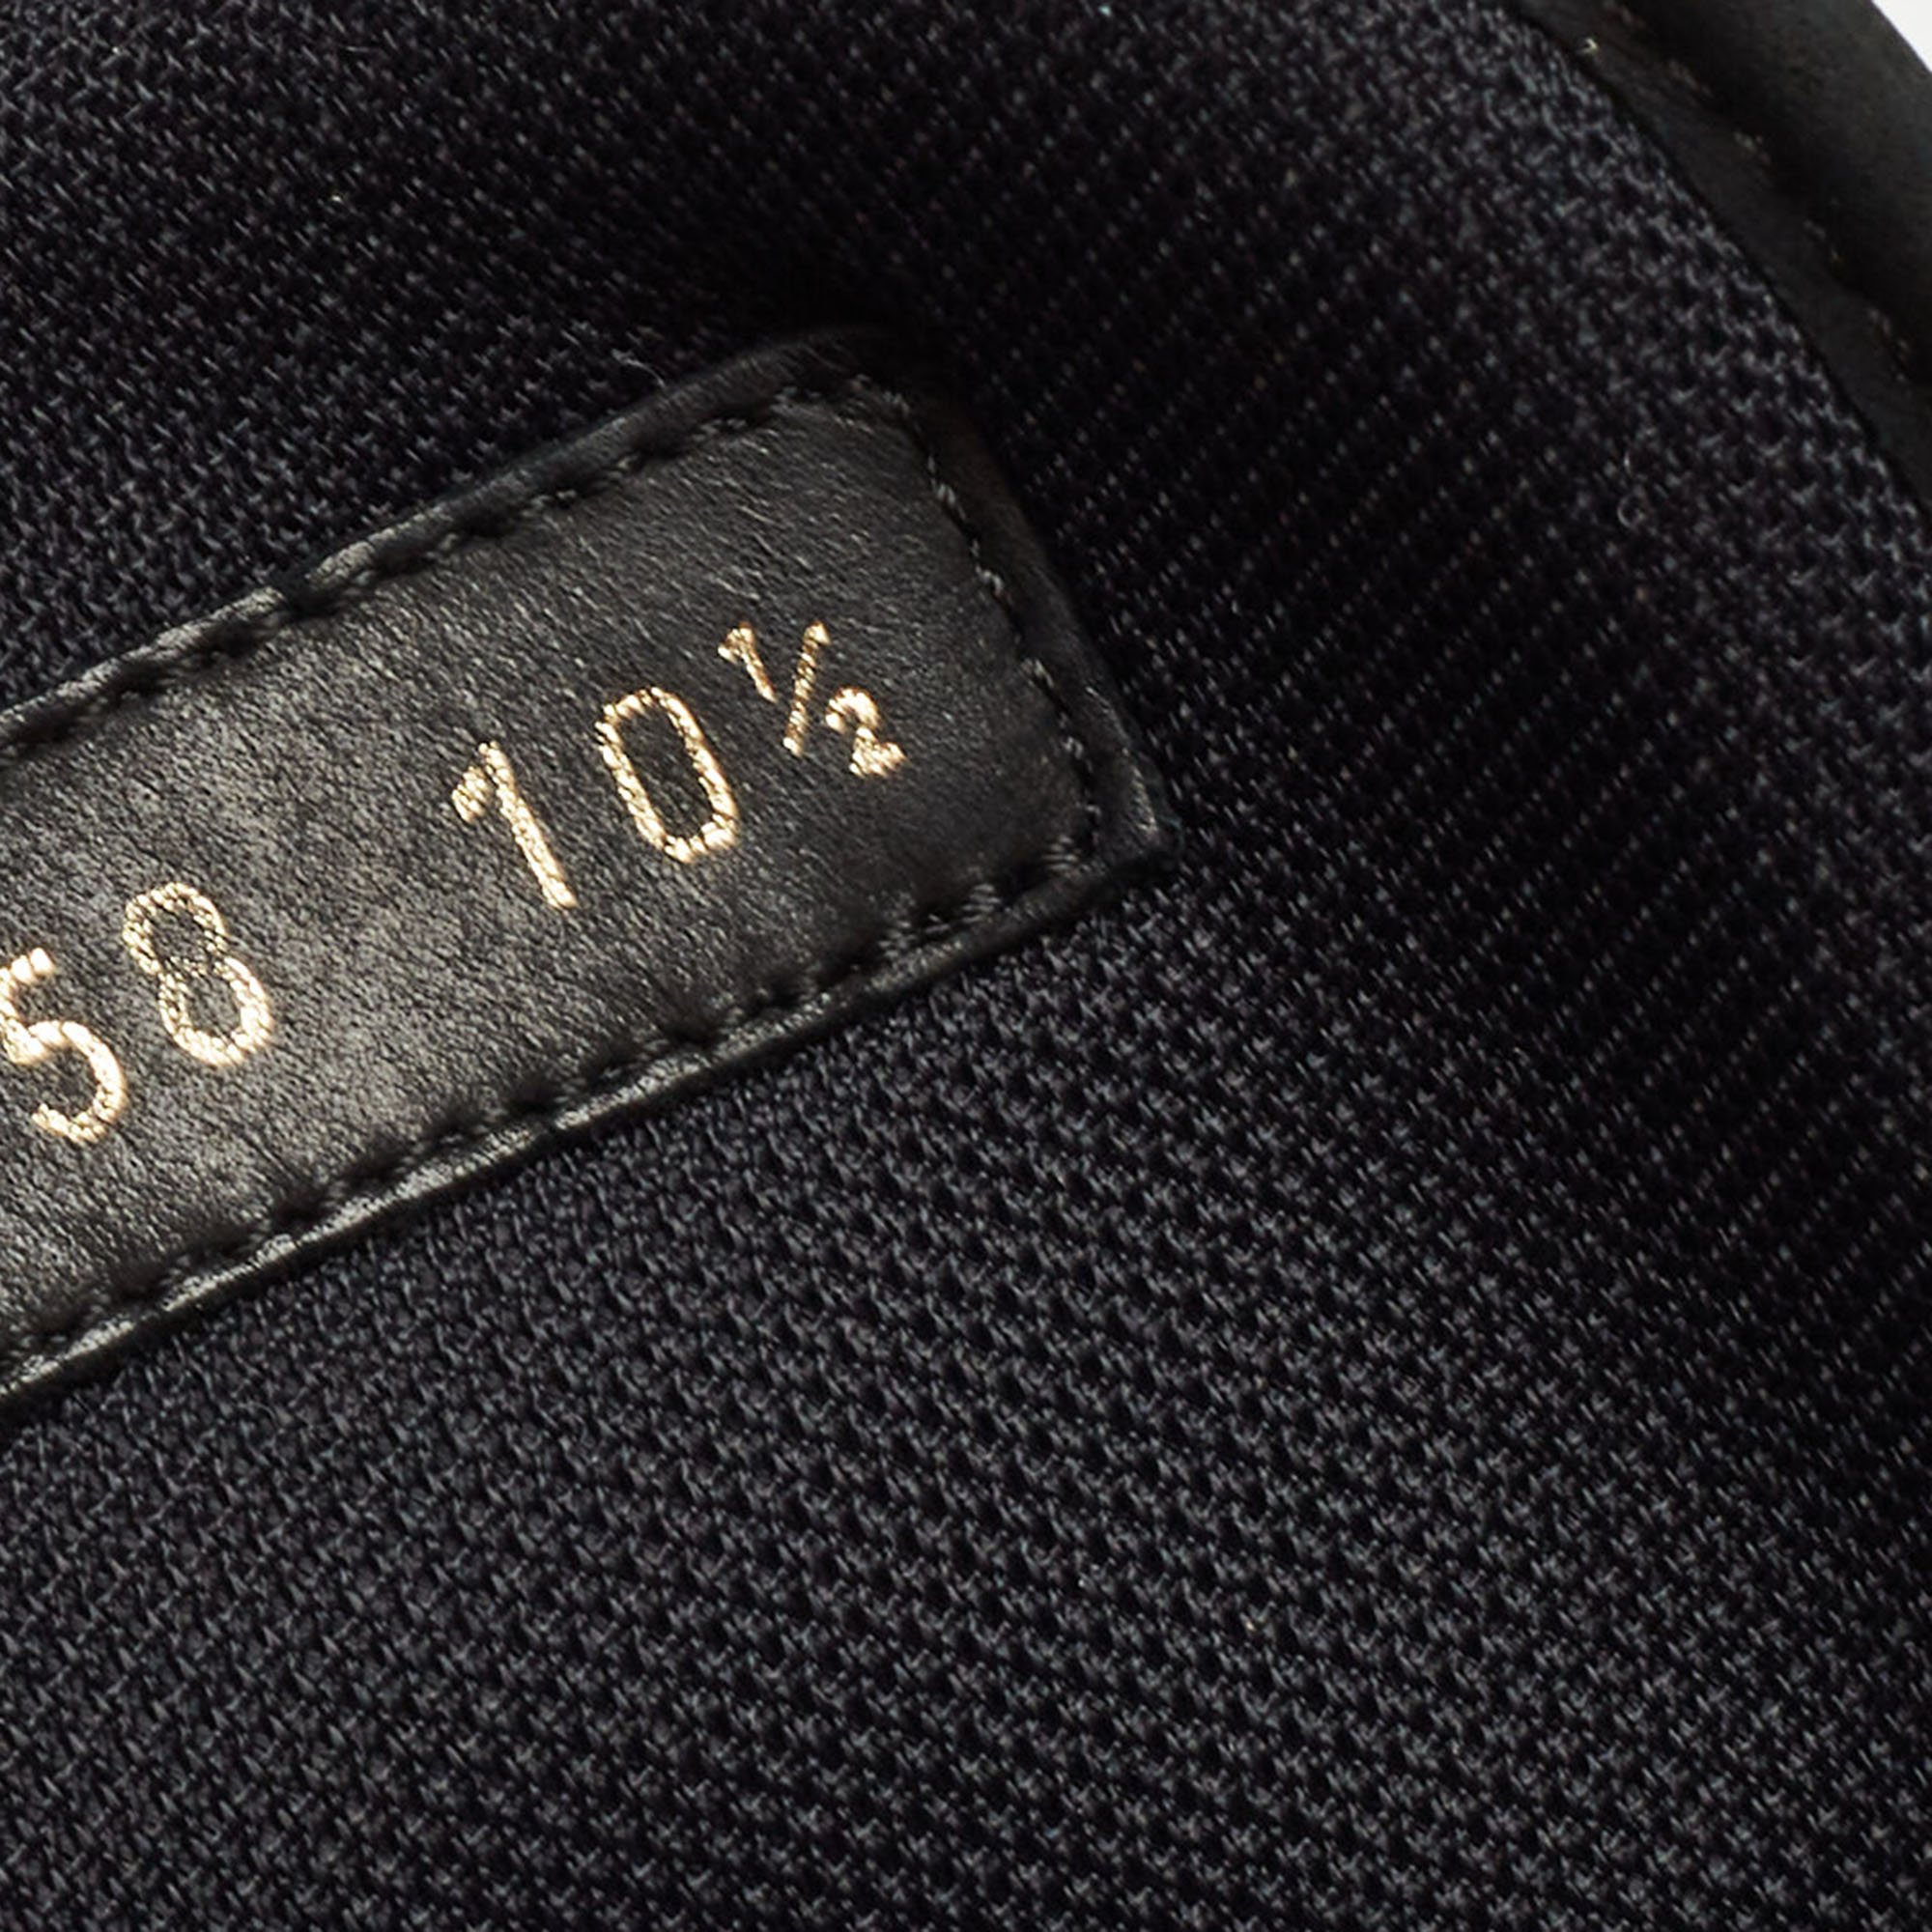 Louis Vuitton Black/Grey Graphite Canvas Rivoli High Top Sneakers Size 44.5